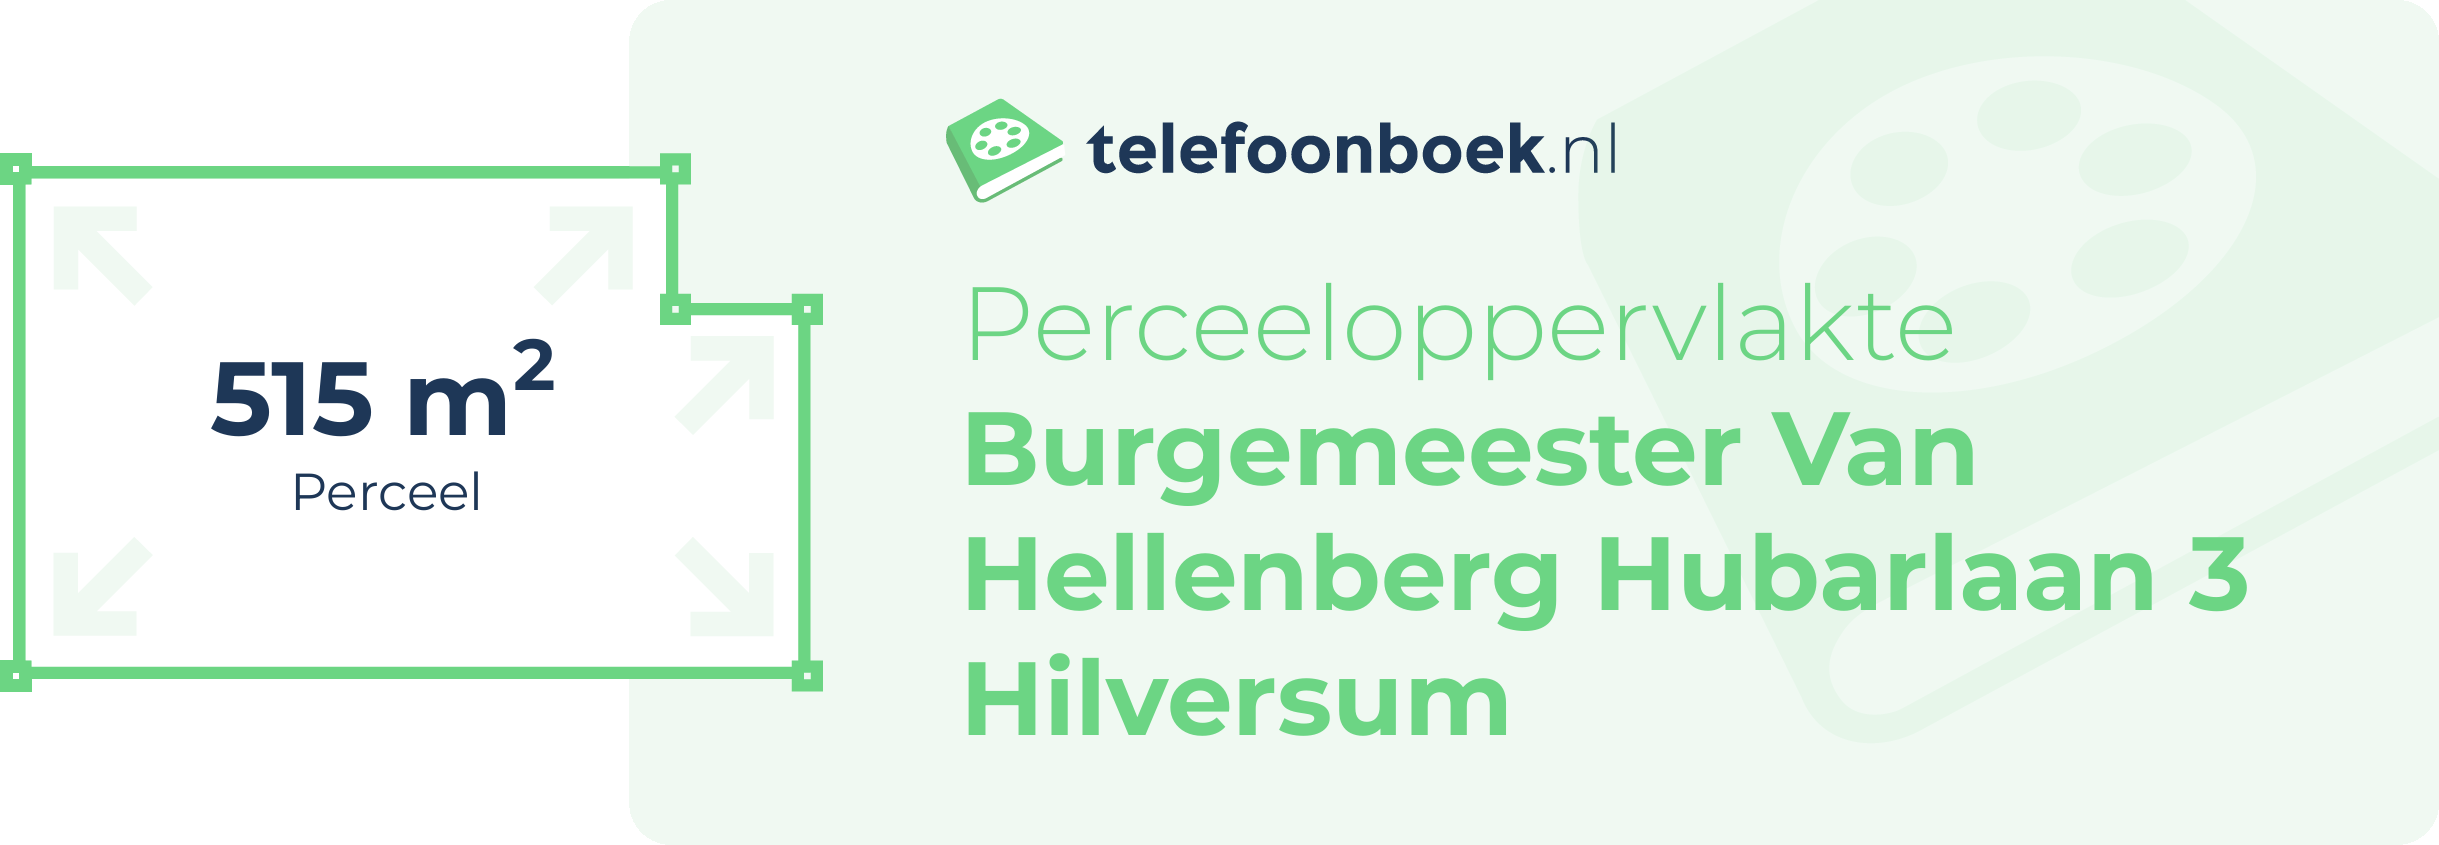 Perceeloppervlakte Burgemeester Van Hellenberg Hubarlaan 3 Hilversum